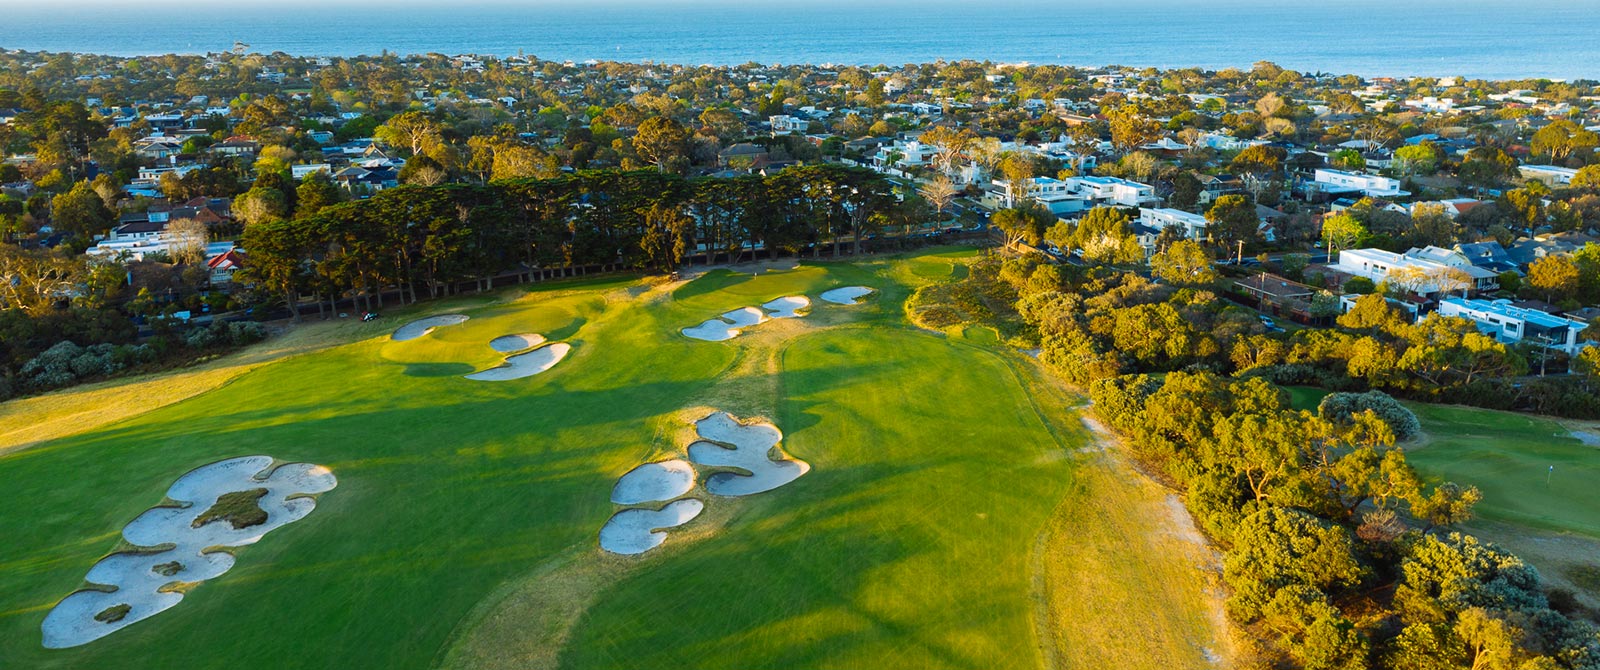 Aerial View of Royal Melbourne Golf Club - Sandbelt Golf Courses Australia